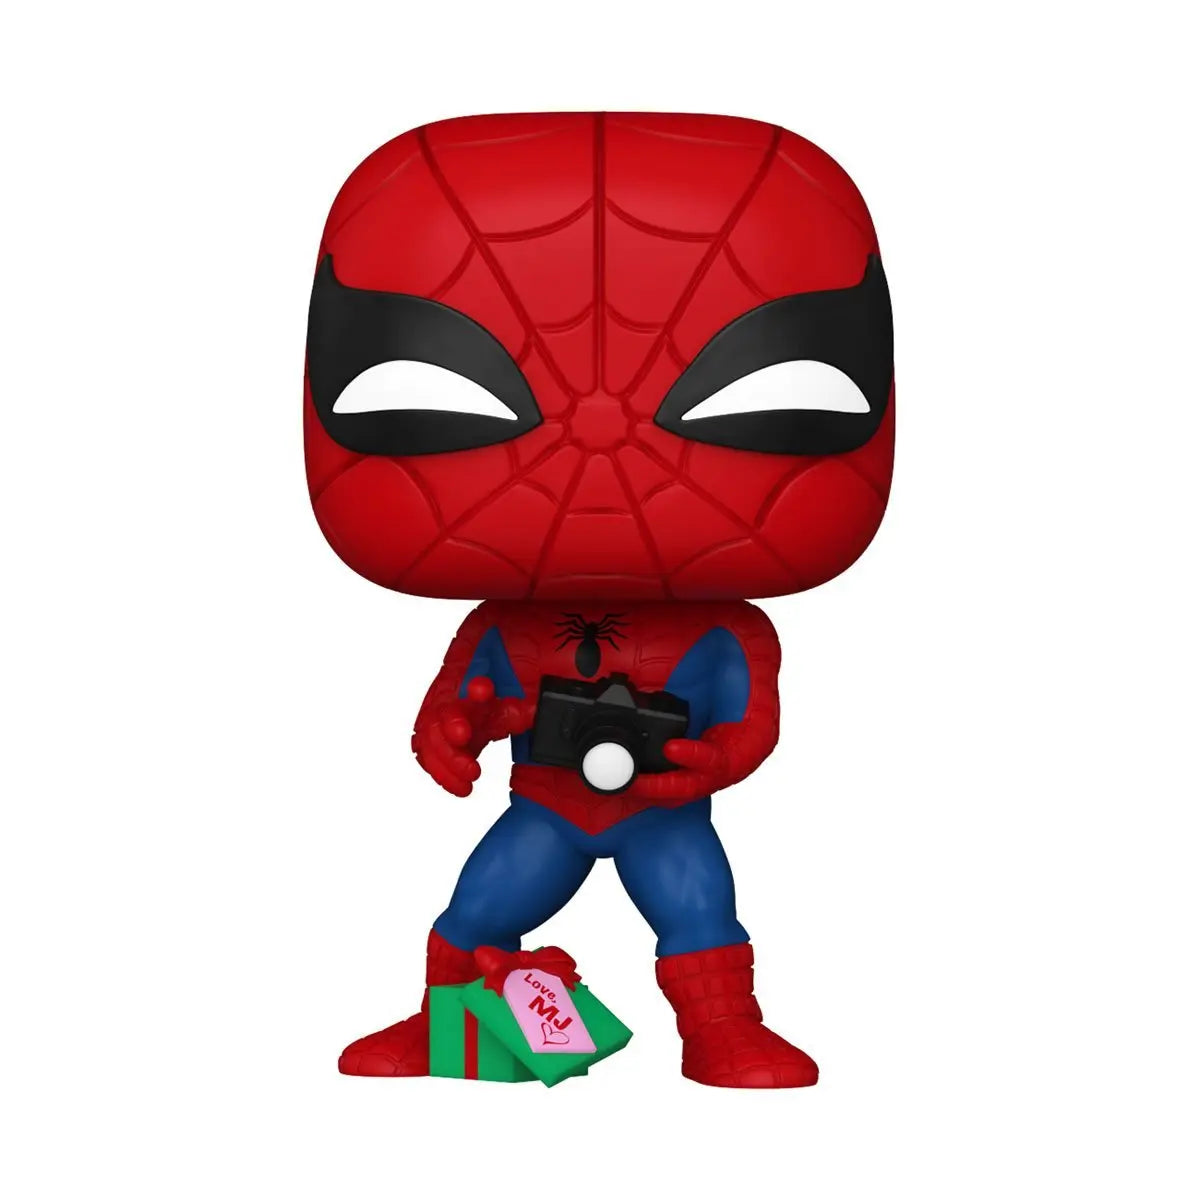 Funko Pop! Holiday Marvel 1441 Spider-Man Funko